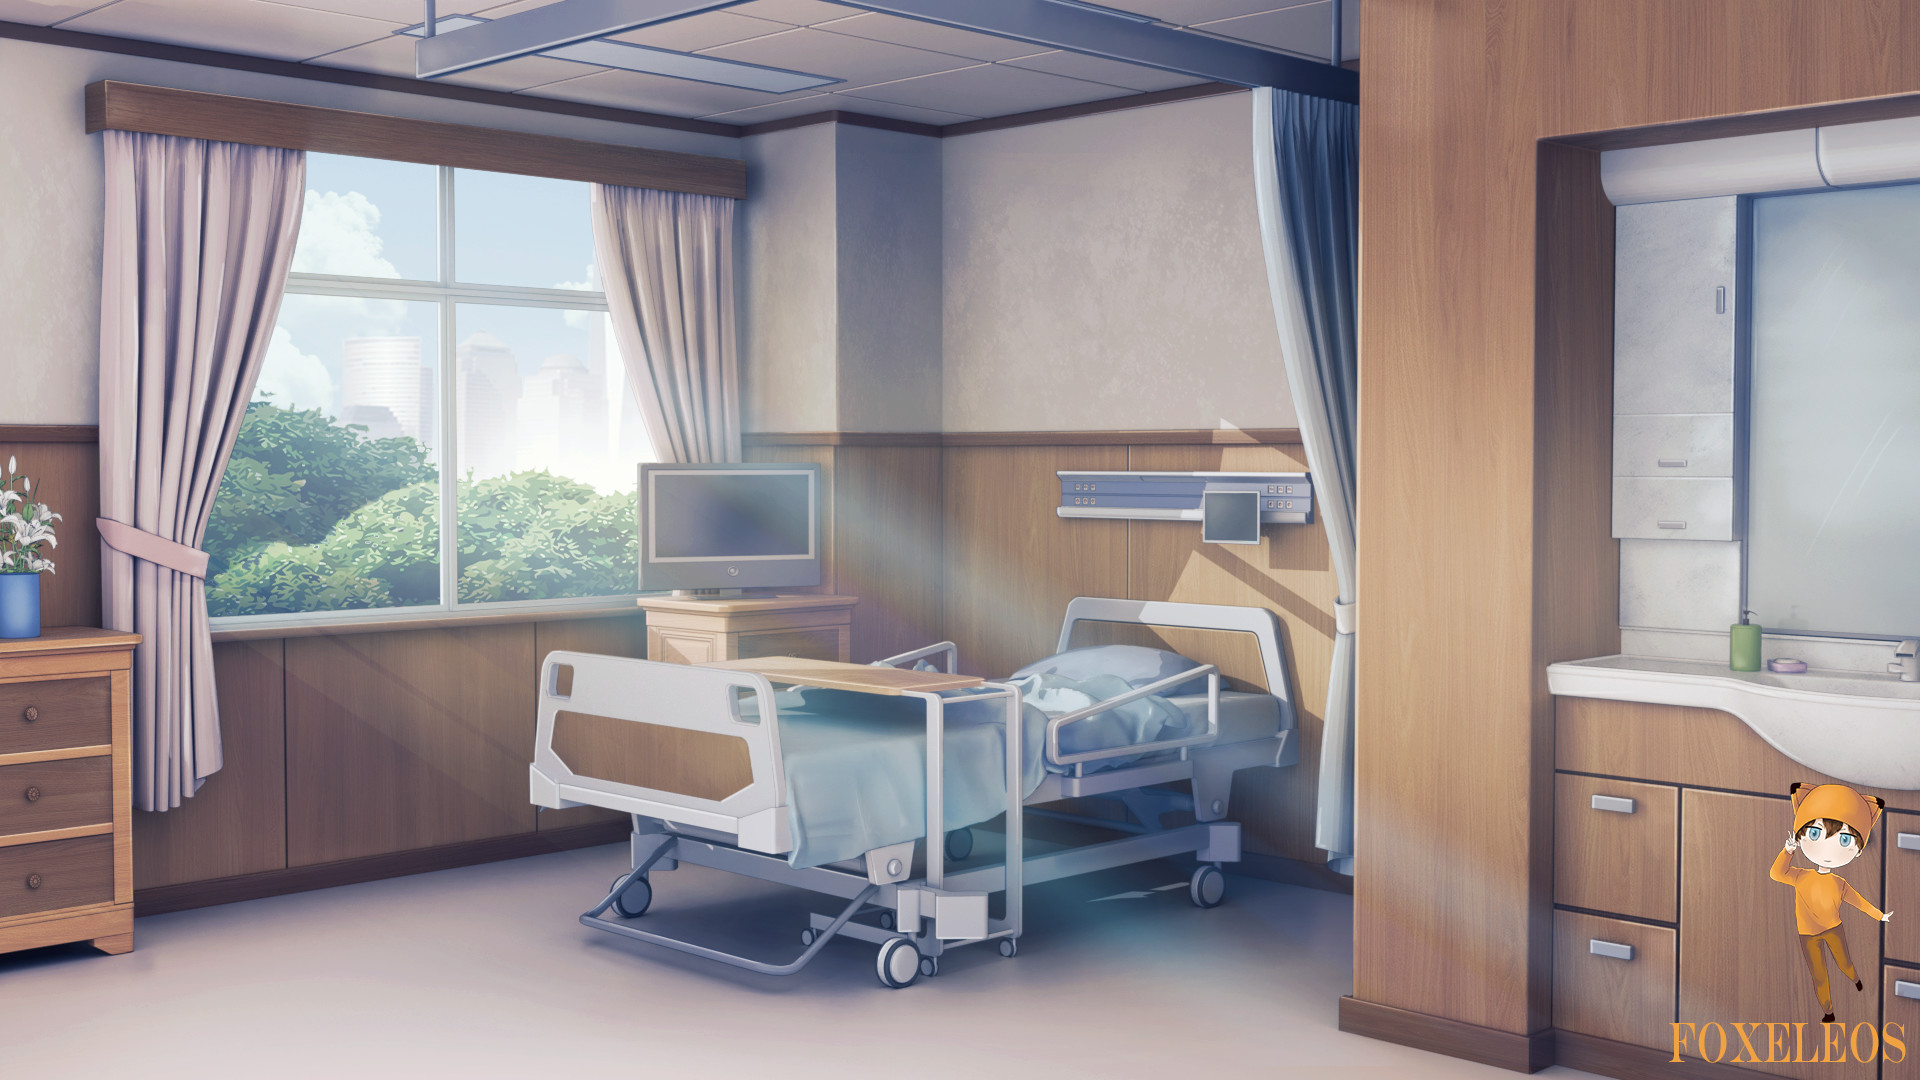 Hospital Room Anime Hospital Background